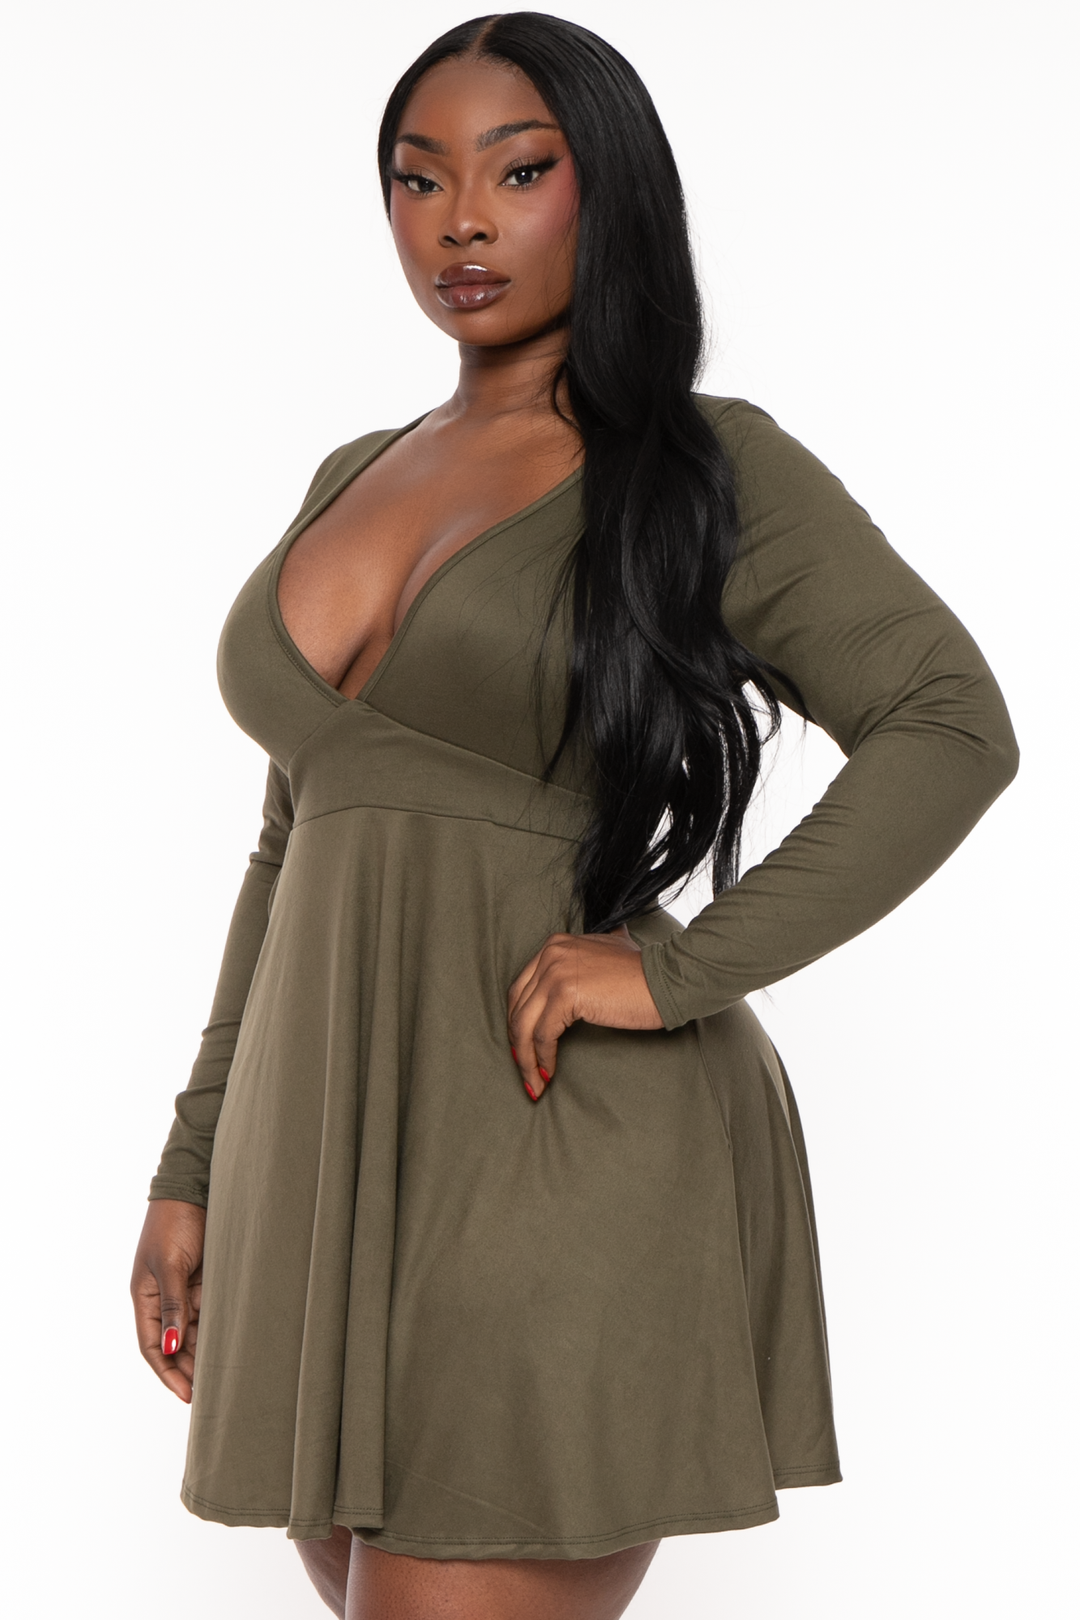 Curvy Sense Dresses Plus Size Jeanna Flare Dress - Olive